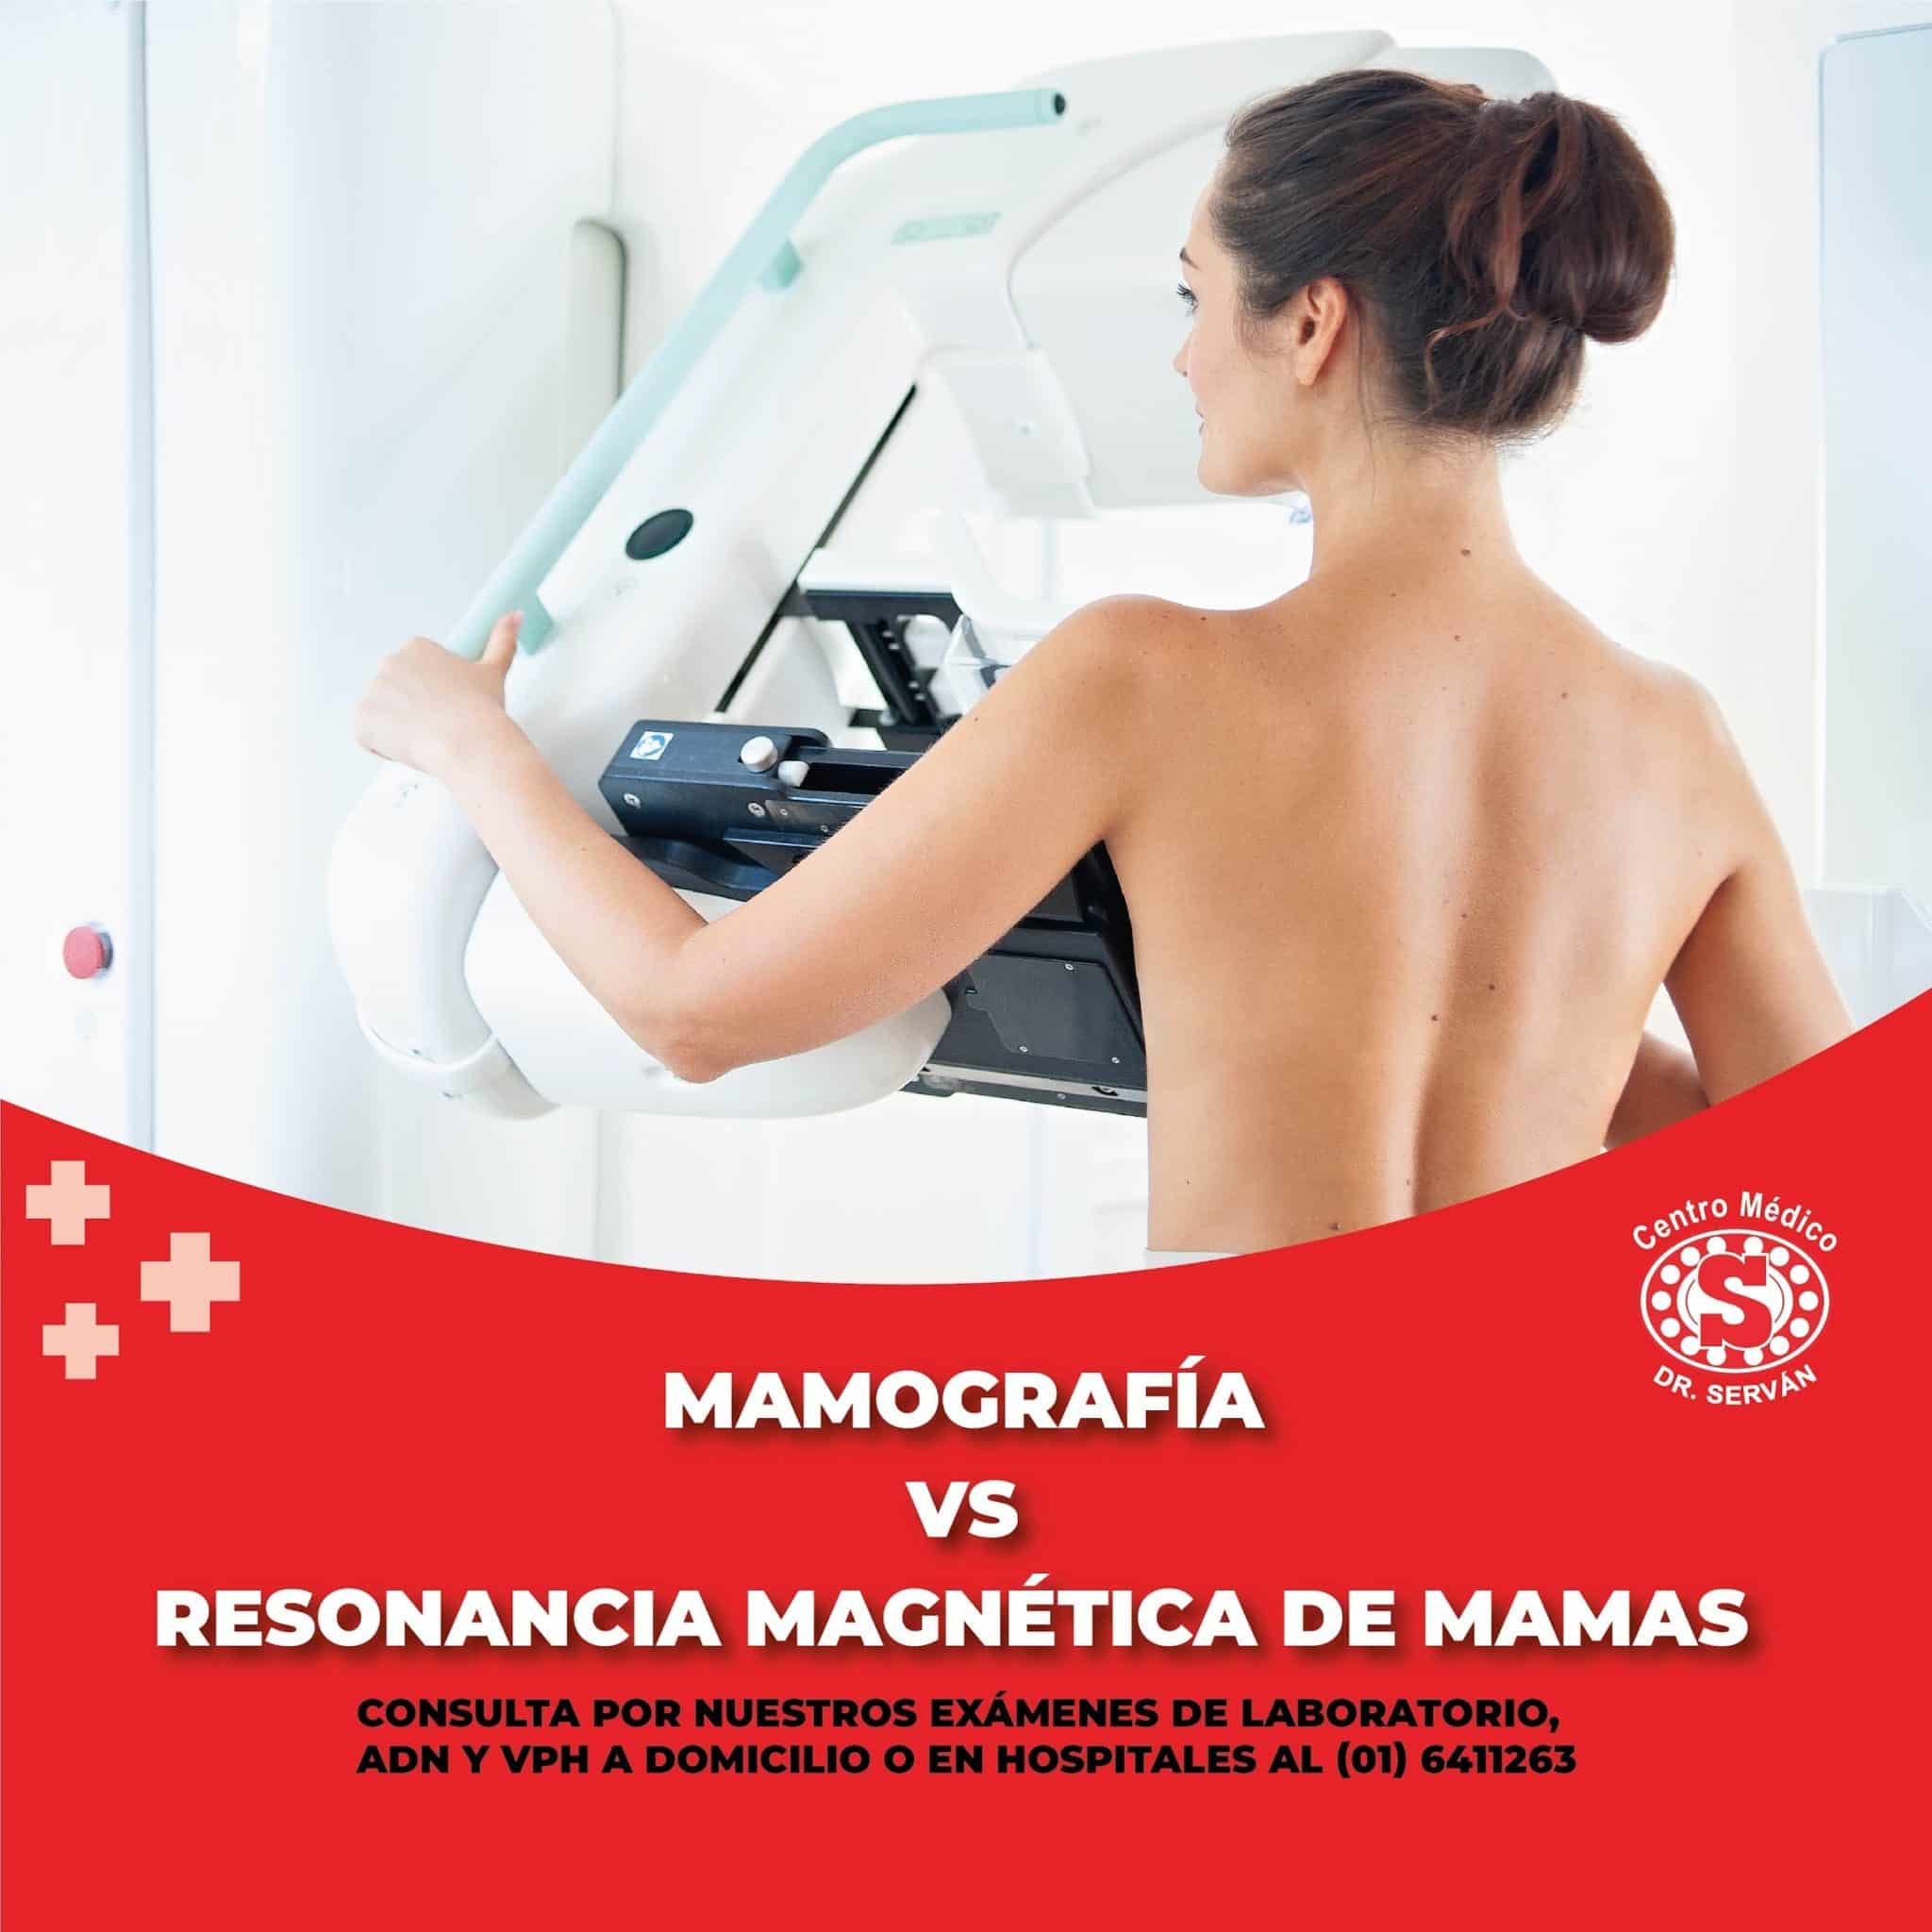 Mamografía Vs Resonancia Magnética De Mamas – Centro Médico Dr Serván